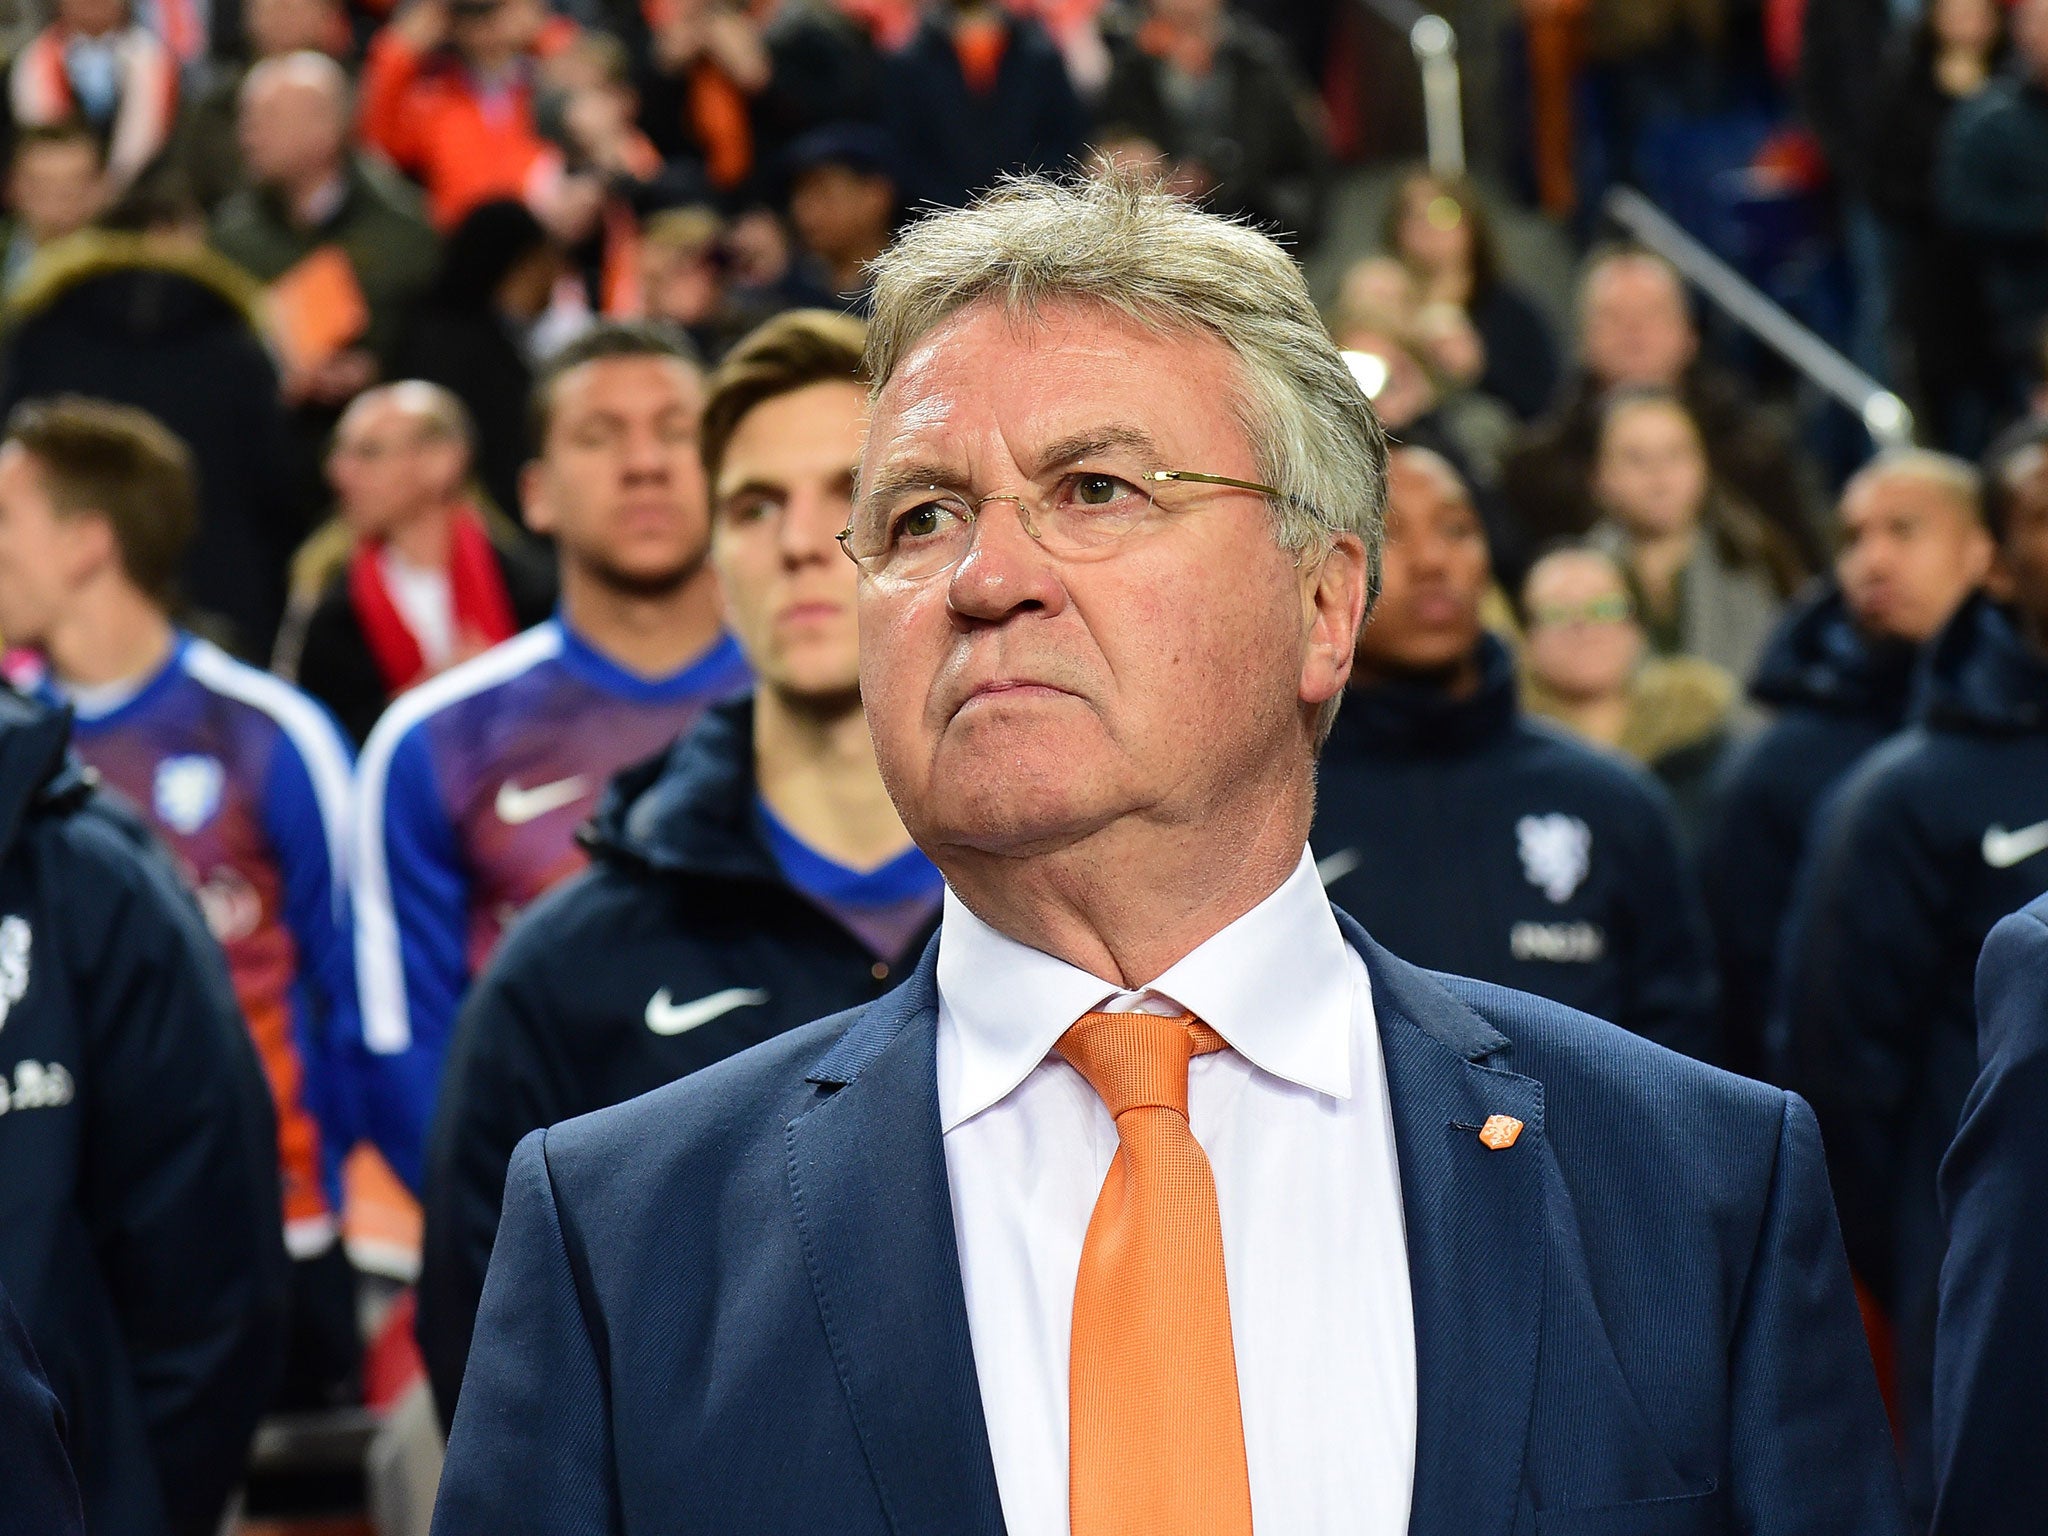 Netherlands head coach Guus Hiddink has resigned